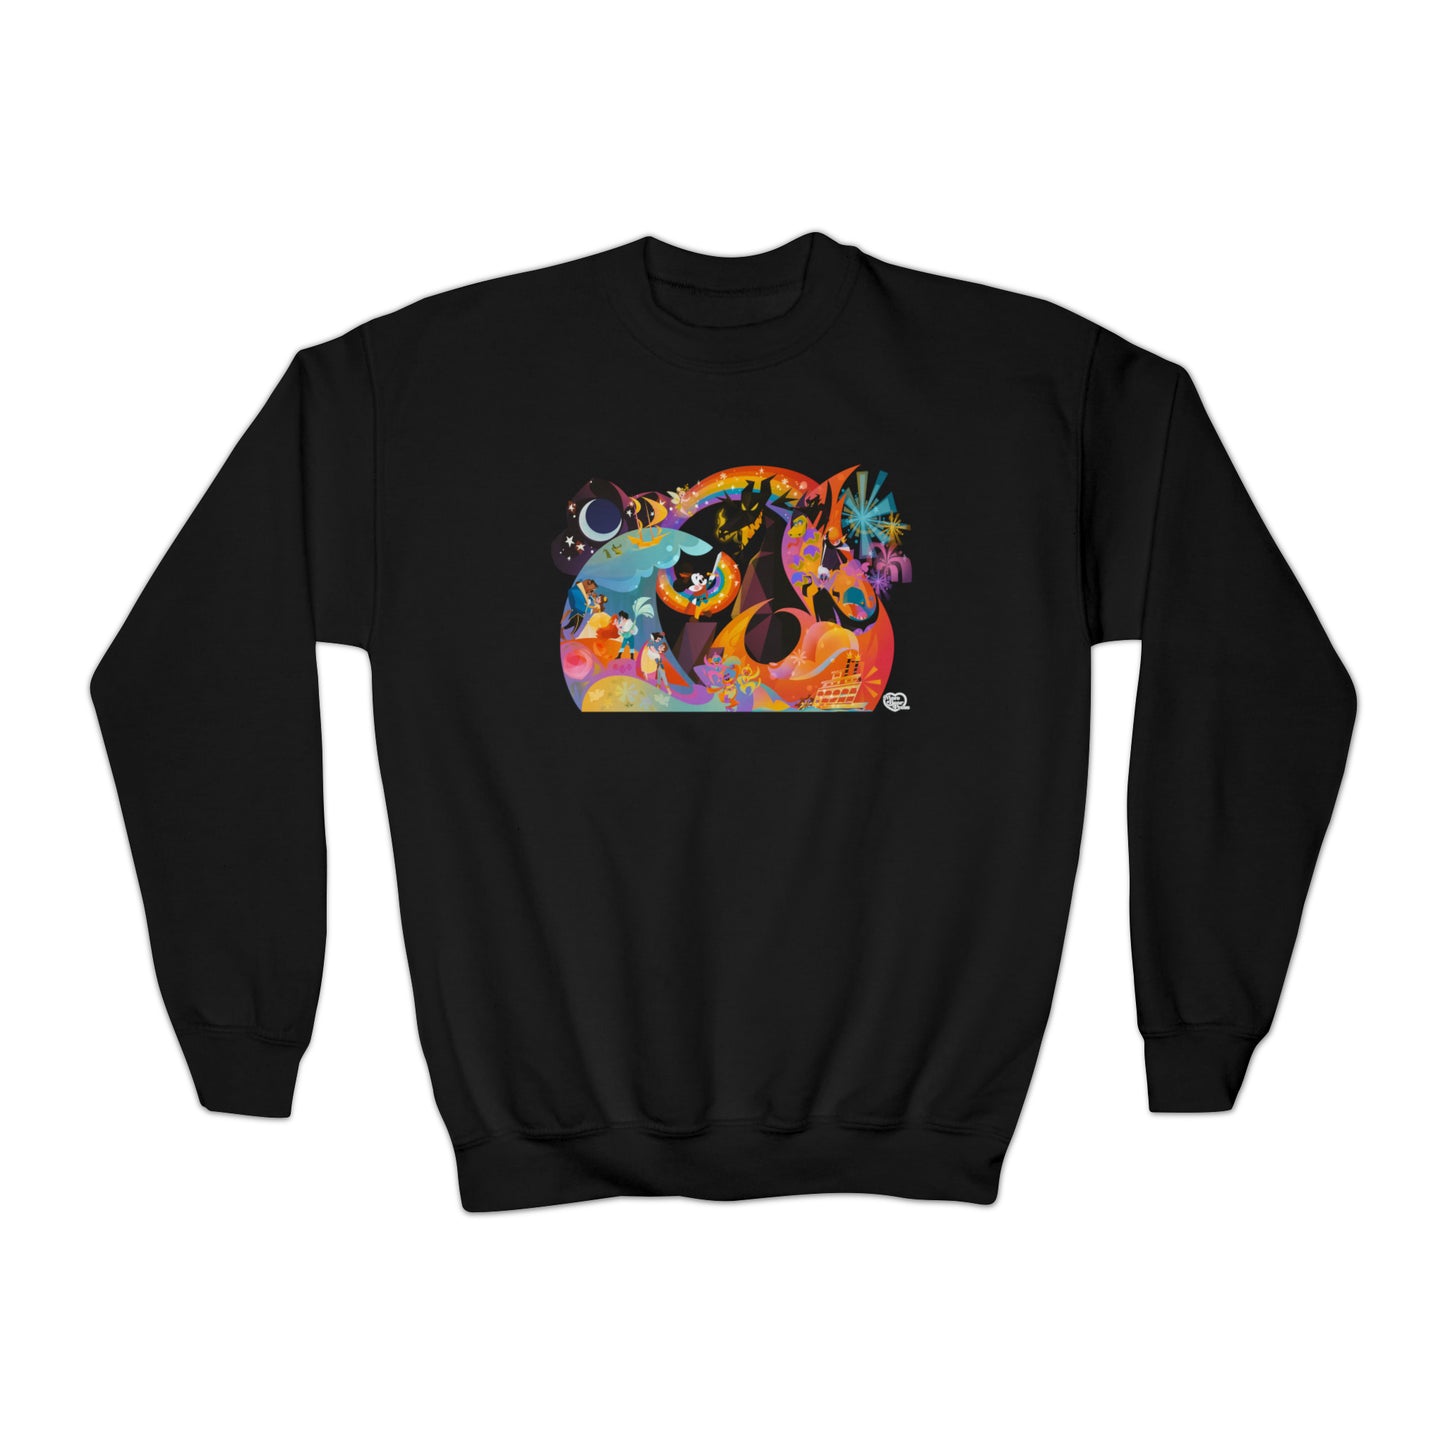 Visions Fantastic Sweatshirt (Youth)